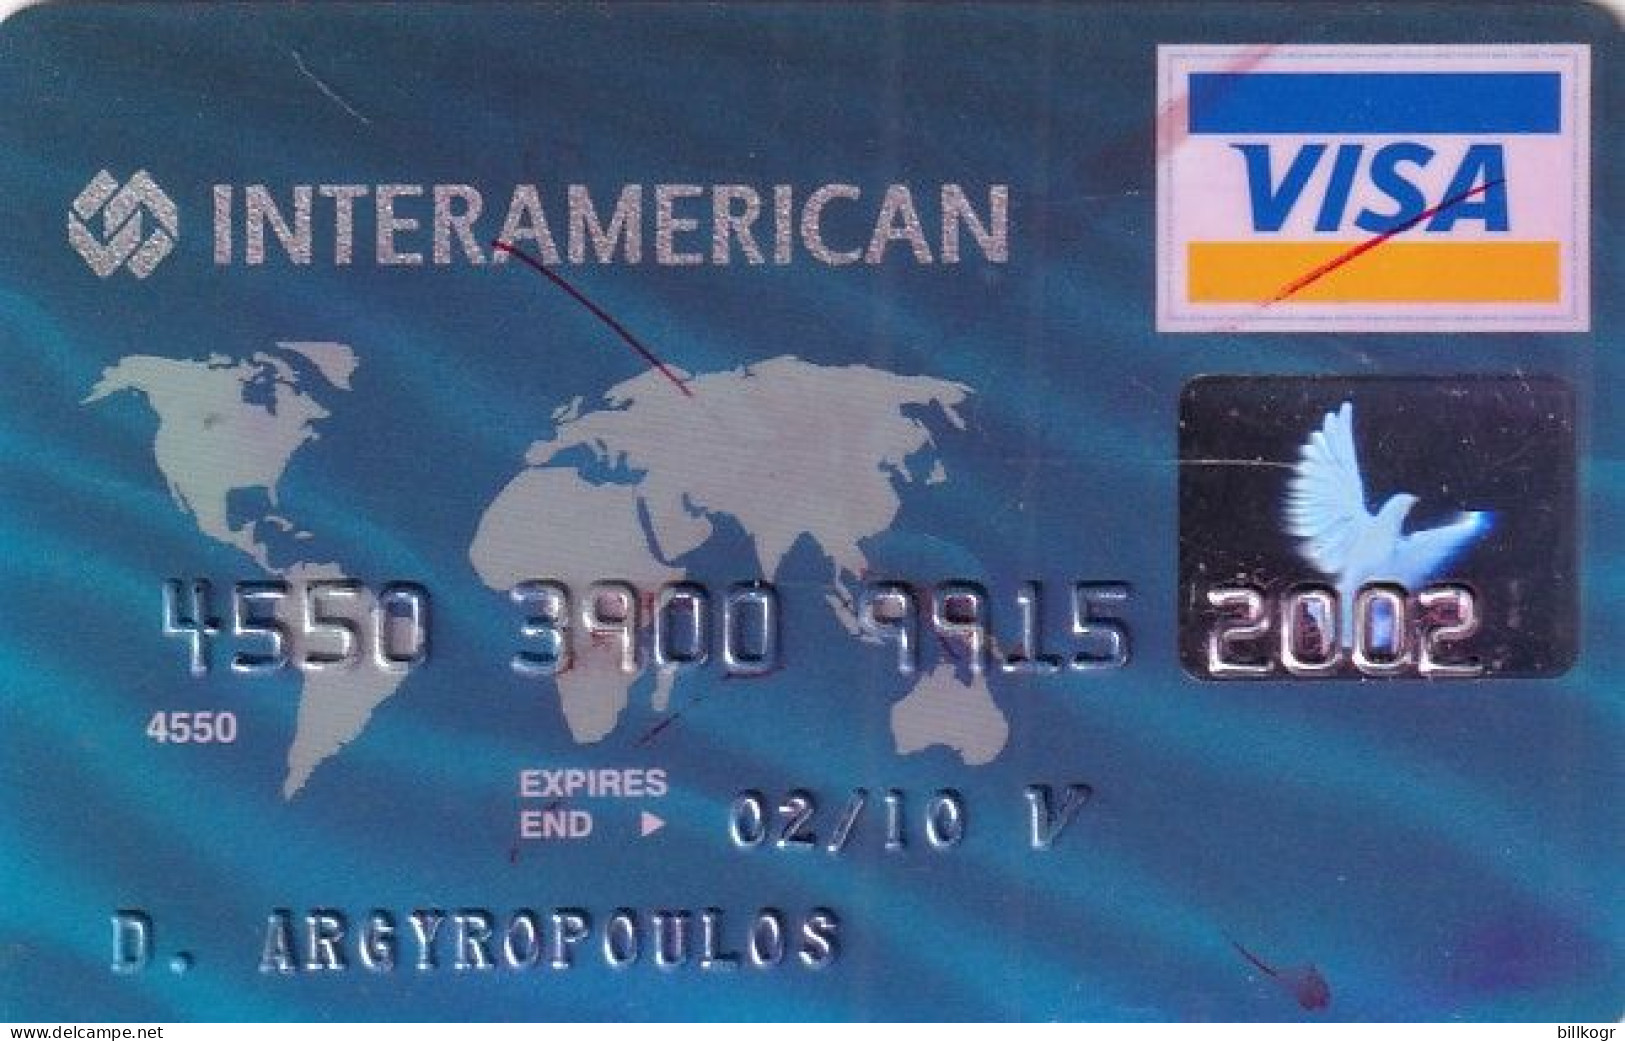 GREECE - Interamerican, EFG Eurobank Ergasias Visa, 05/04, Used - Krediet Kaarten (vervaldatum Min. 10 Jaar)